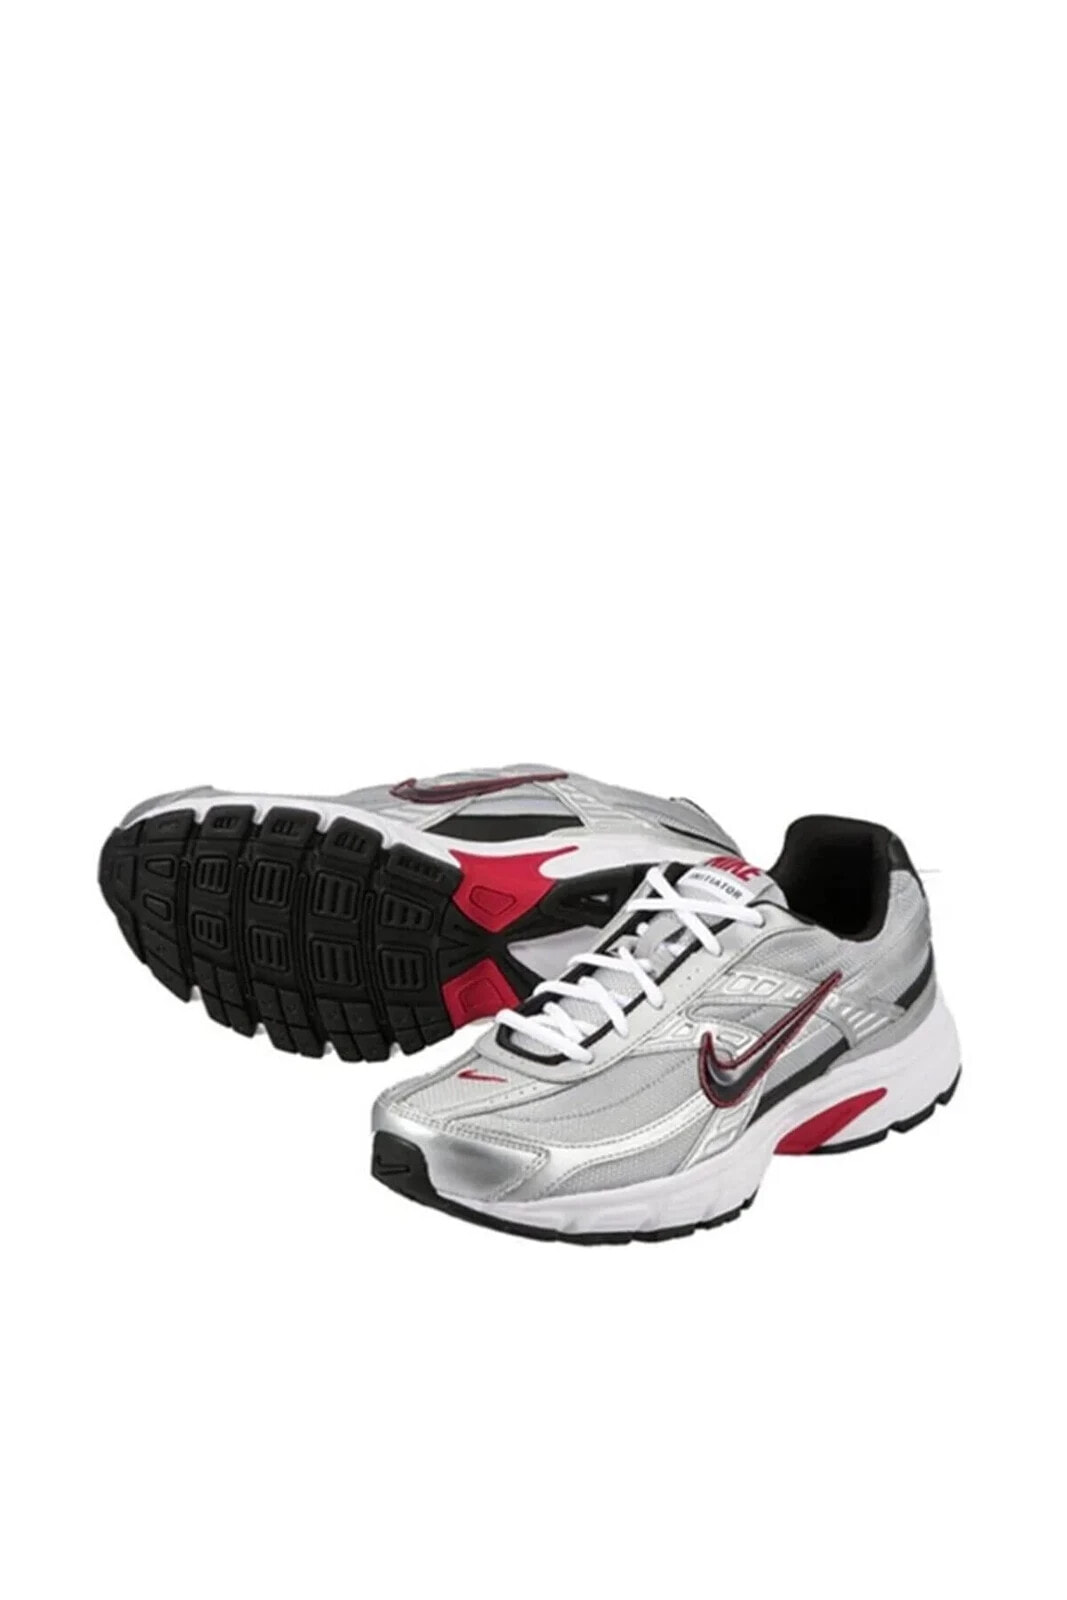 Кроссовки nike initiator. Nike 394055-001. Кроссовки Nike Initiator 394055-001 43. Кроссовки для бега Nike Initiator. Nike 394055-001 серебристые.